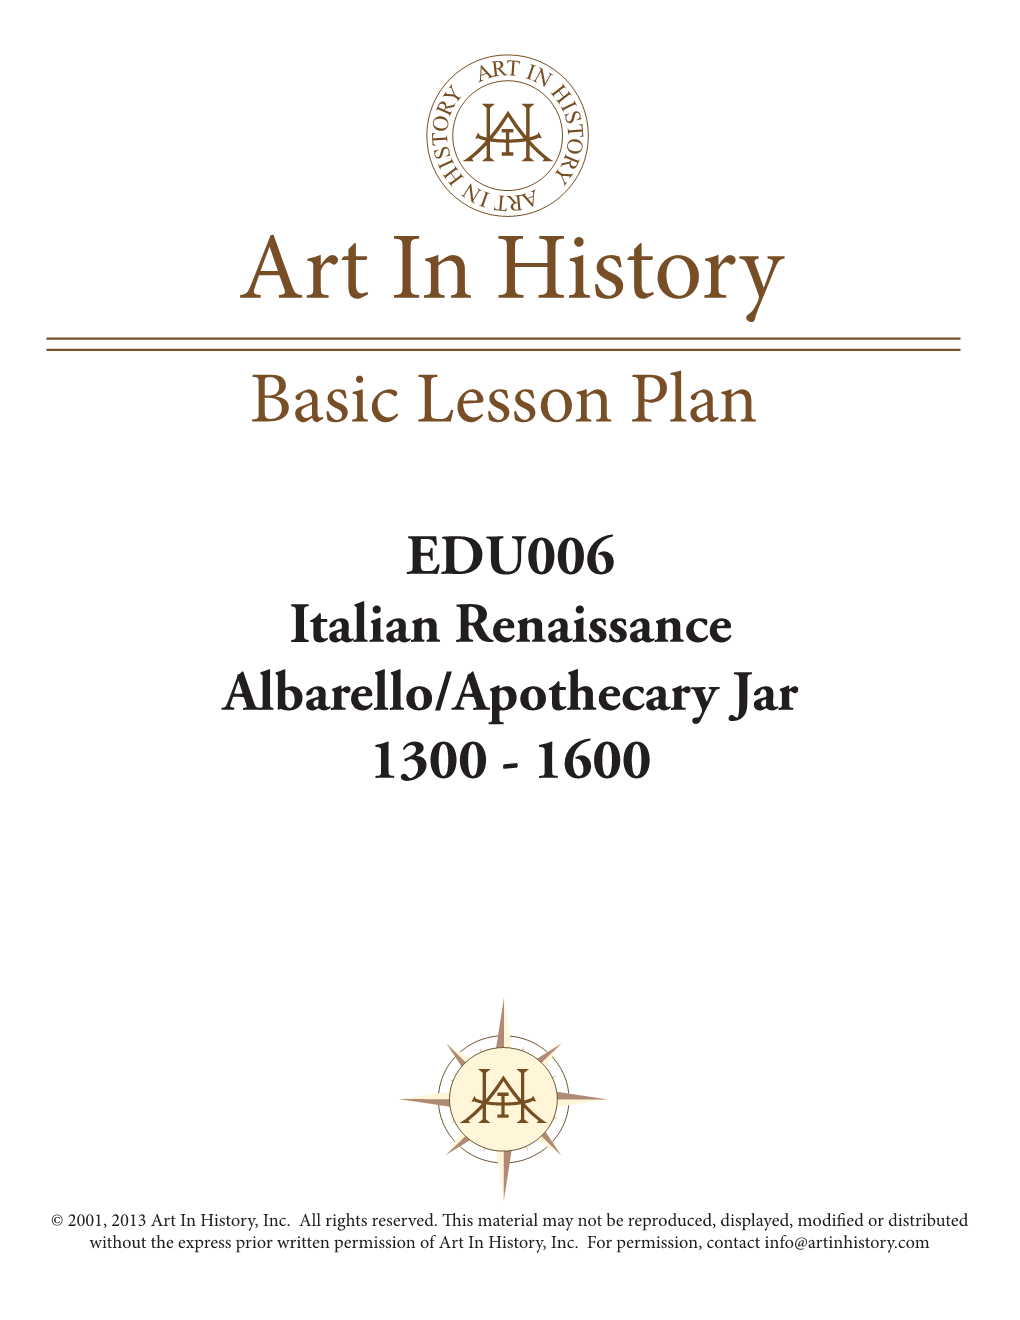 Art in History Basic Lesson Plan